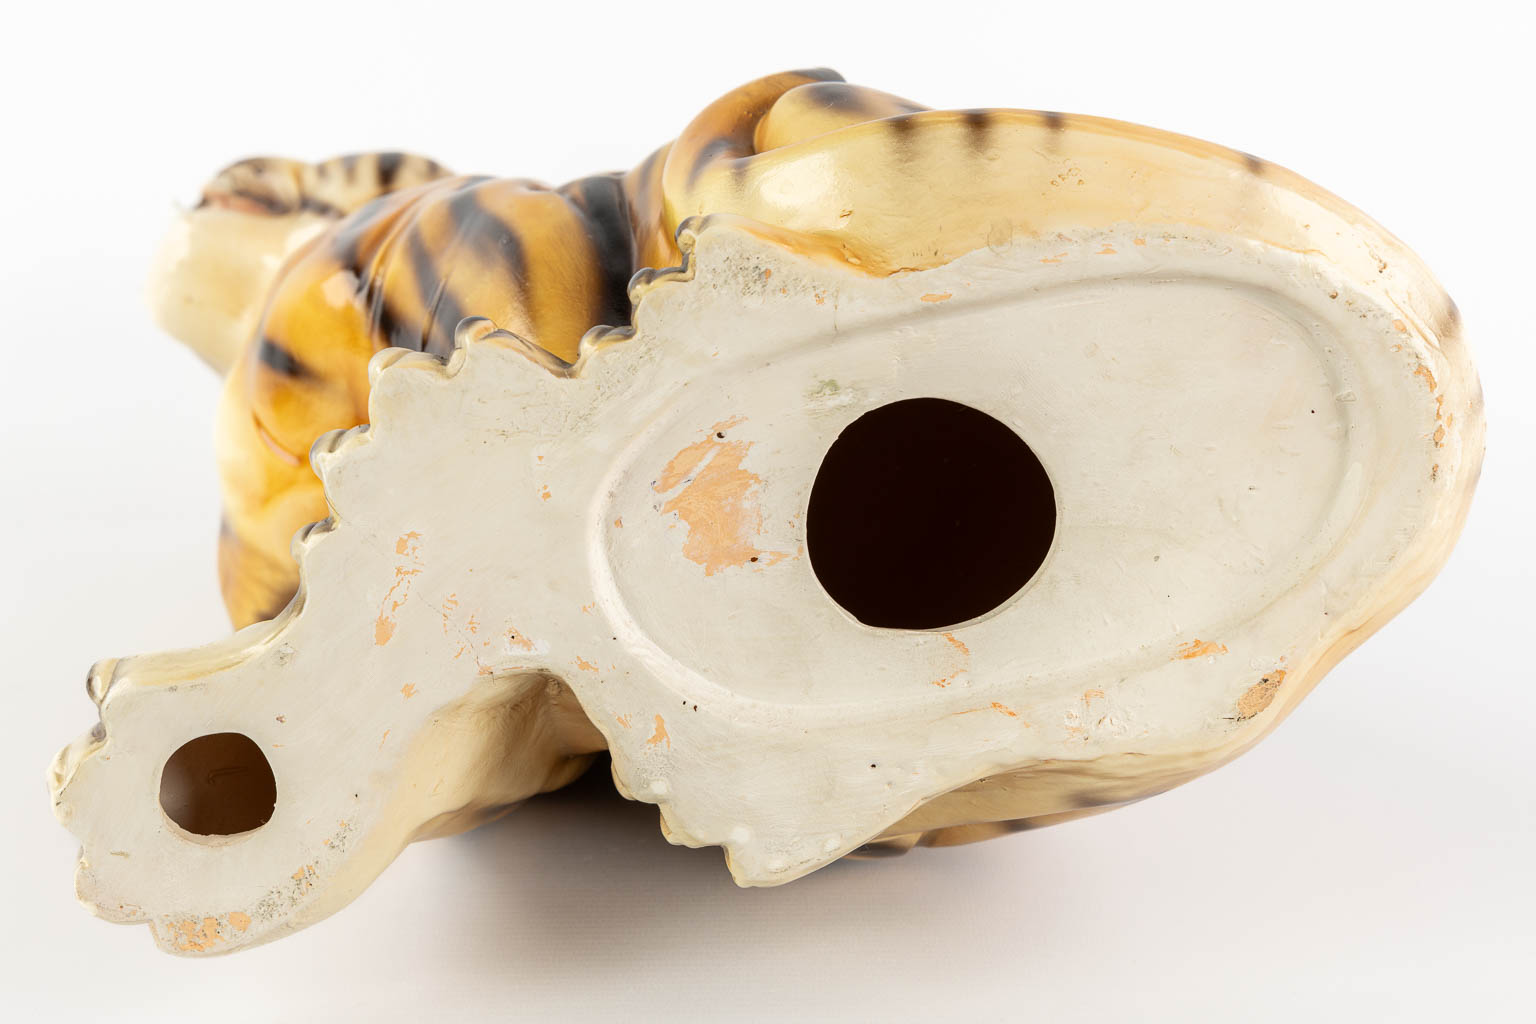 A small figurine of a tiger, glazed ceramics. Italy. (L:18 x W:32 x H:45 cm)